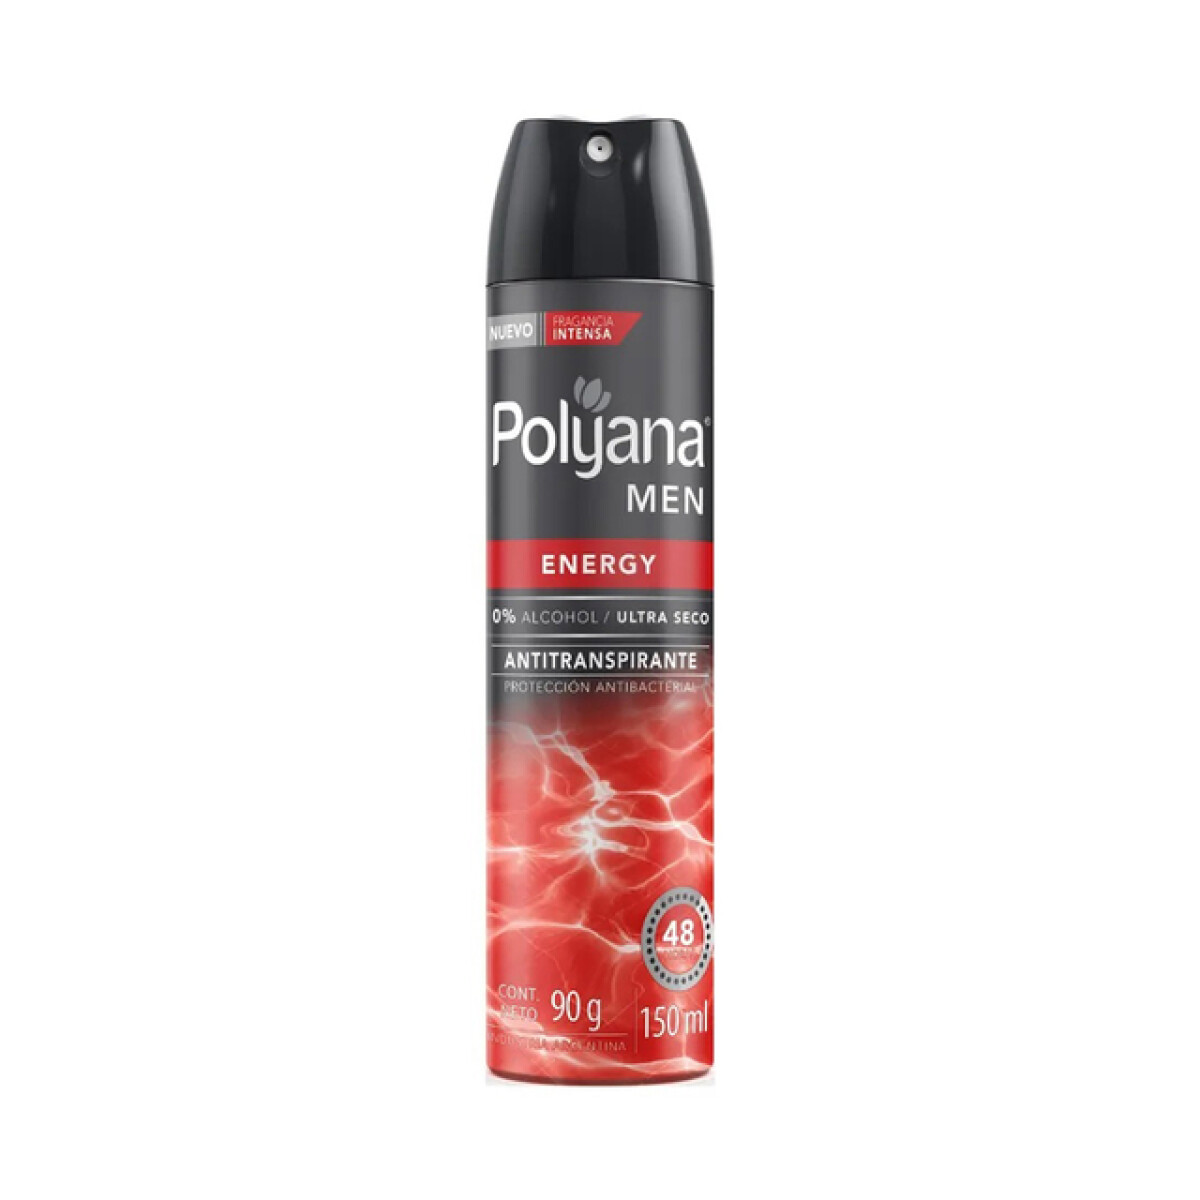 Polyana Antitranspirante aerosol 172 ml - Energy man 